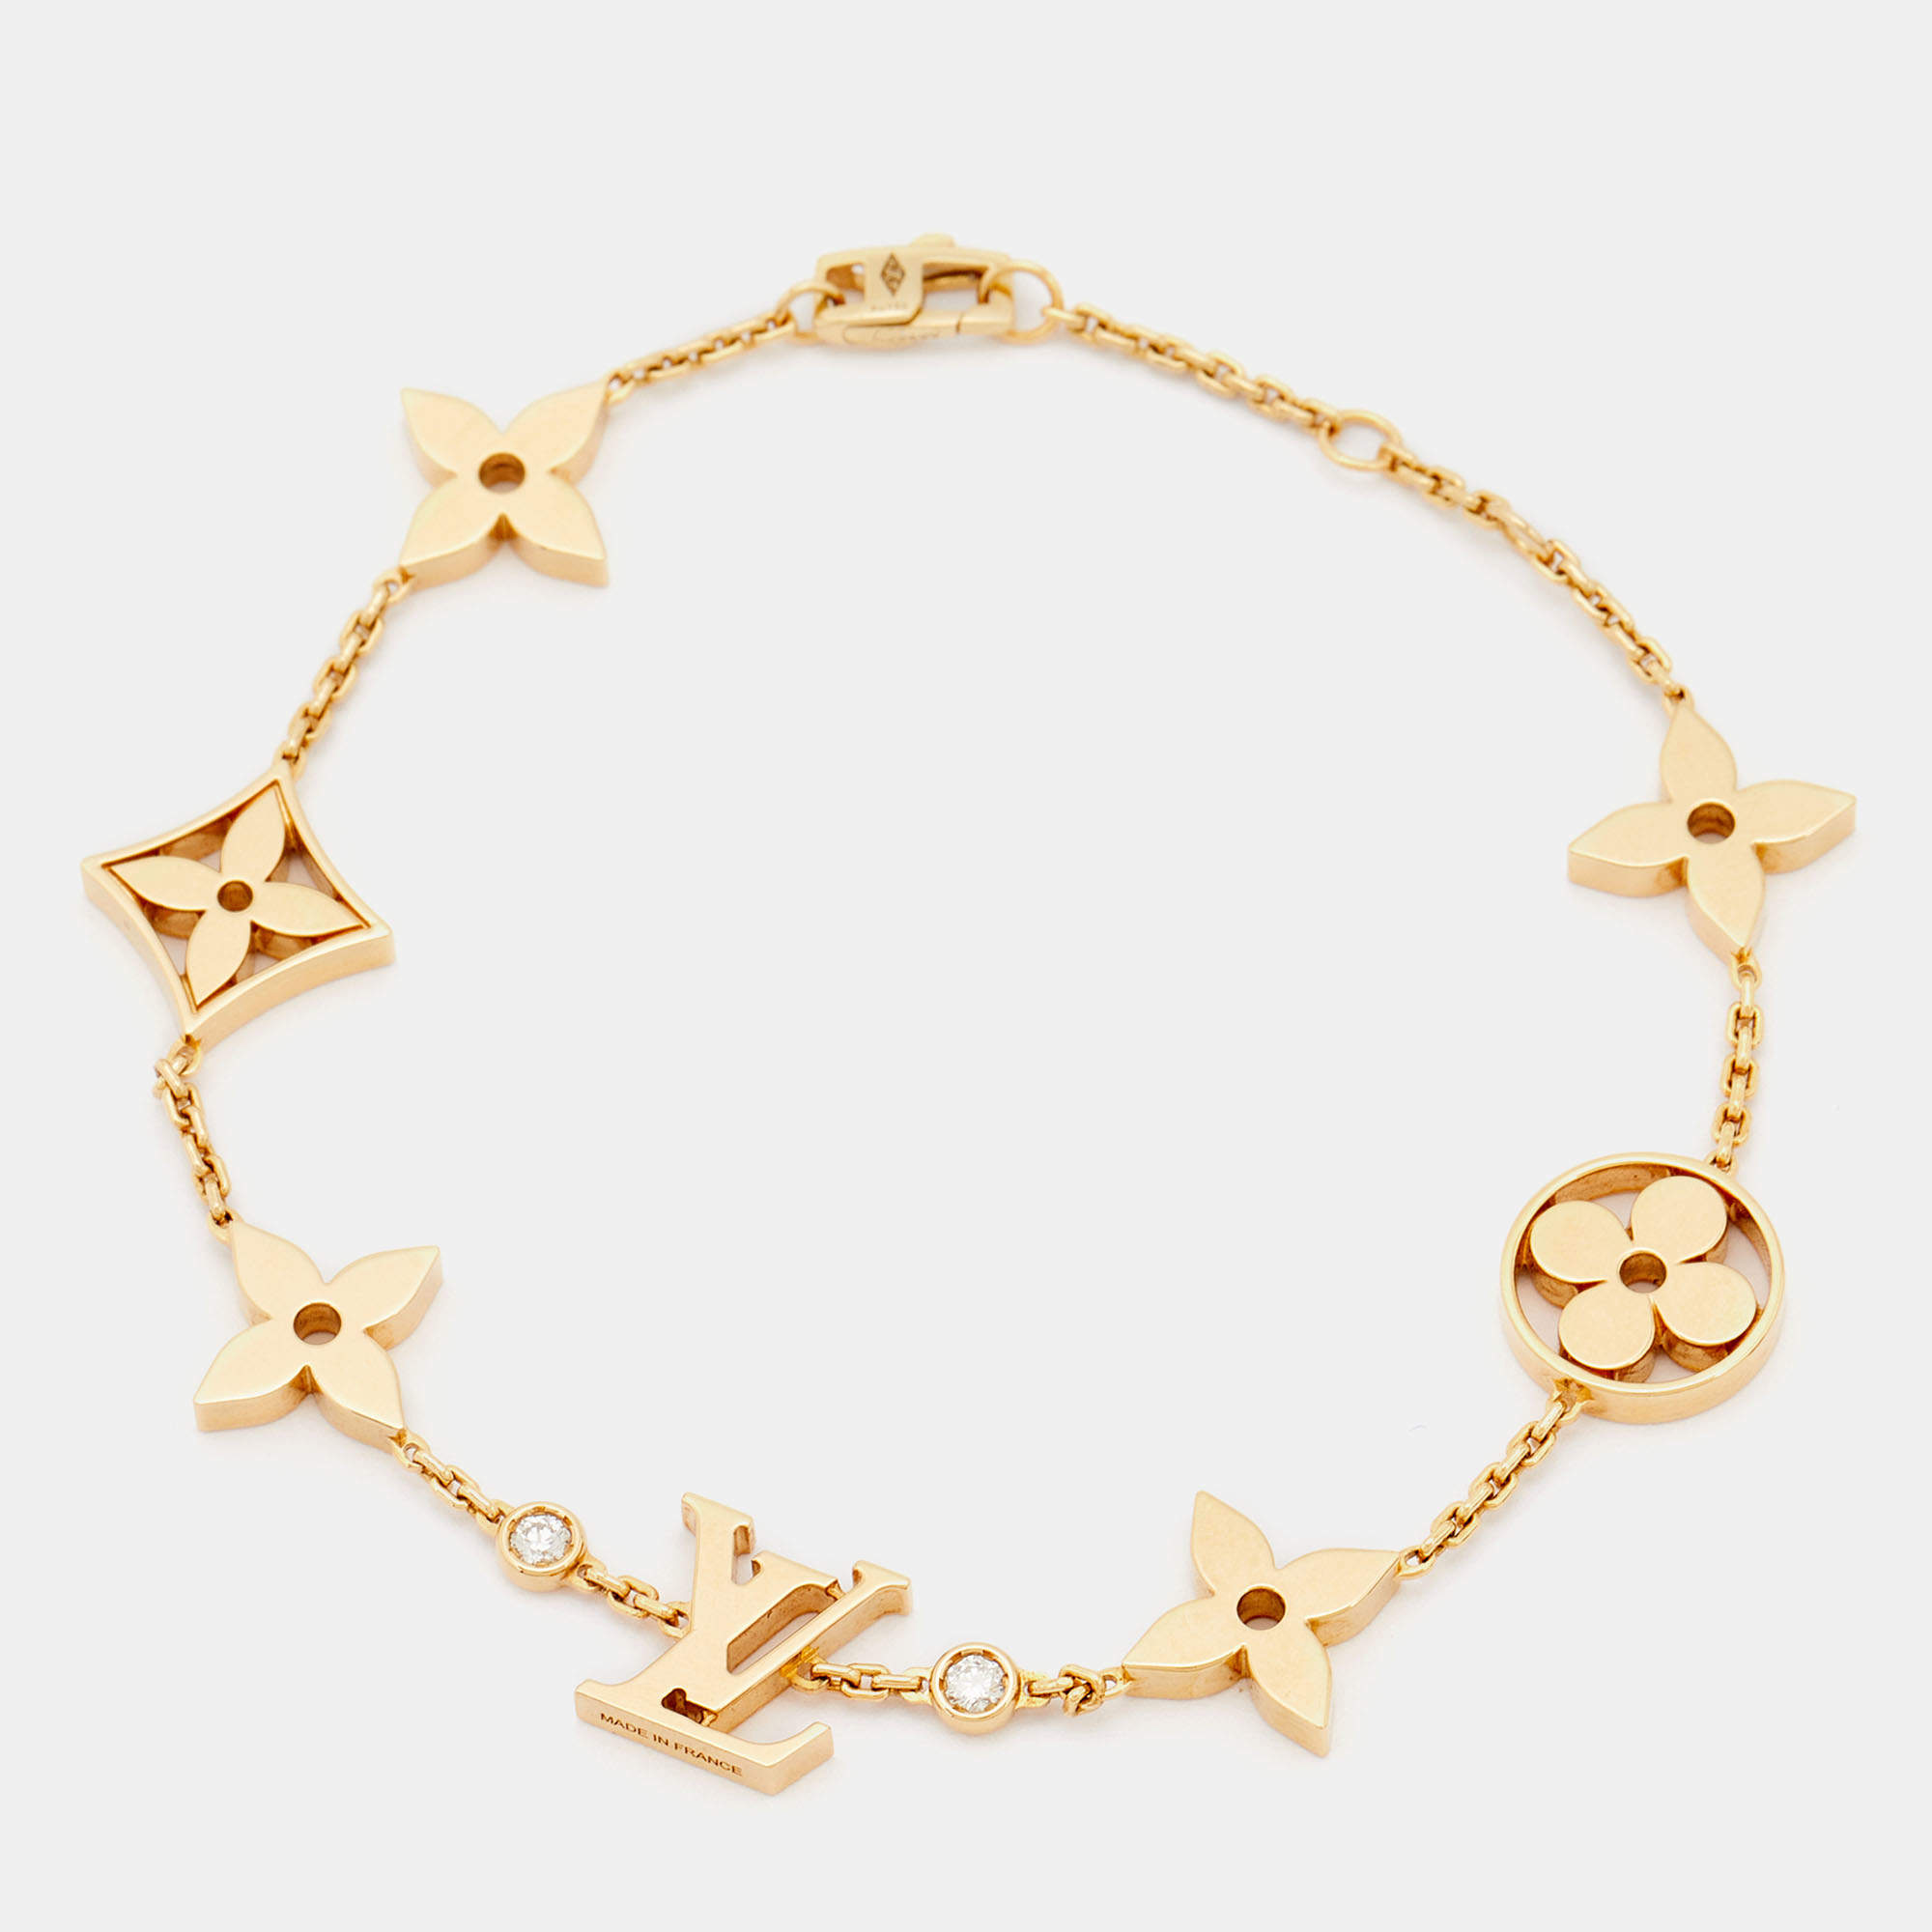 Louis Vuitton Idylle Blossom Monogram Bracelet, Yellow Gold and Diamonds Gold. Size NSA